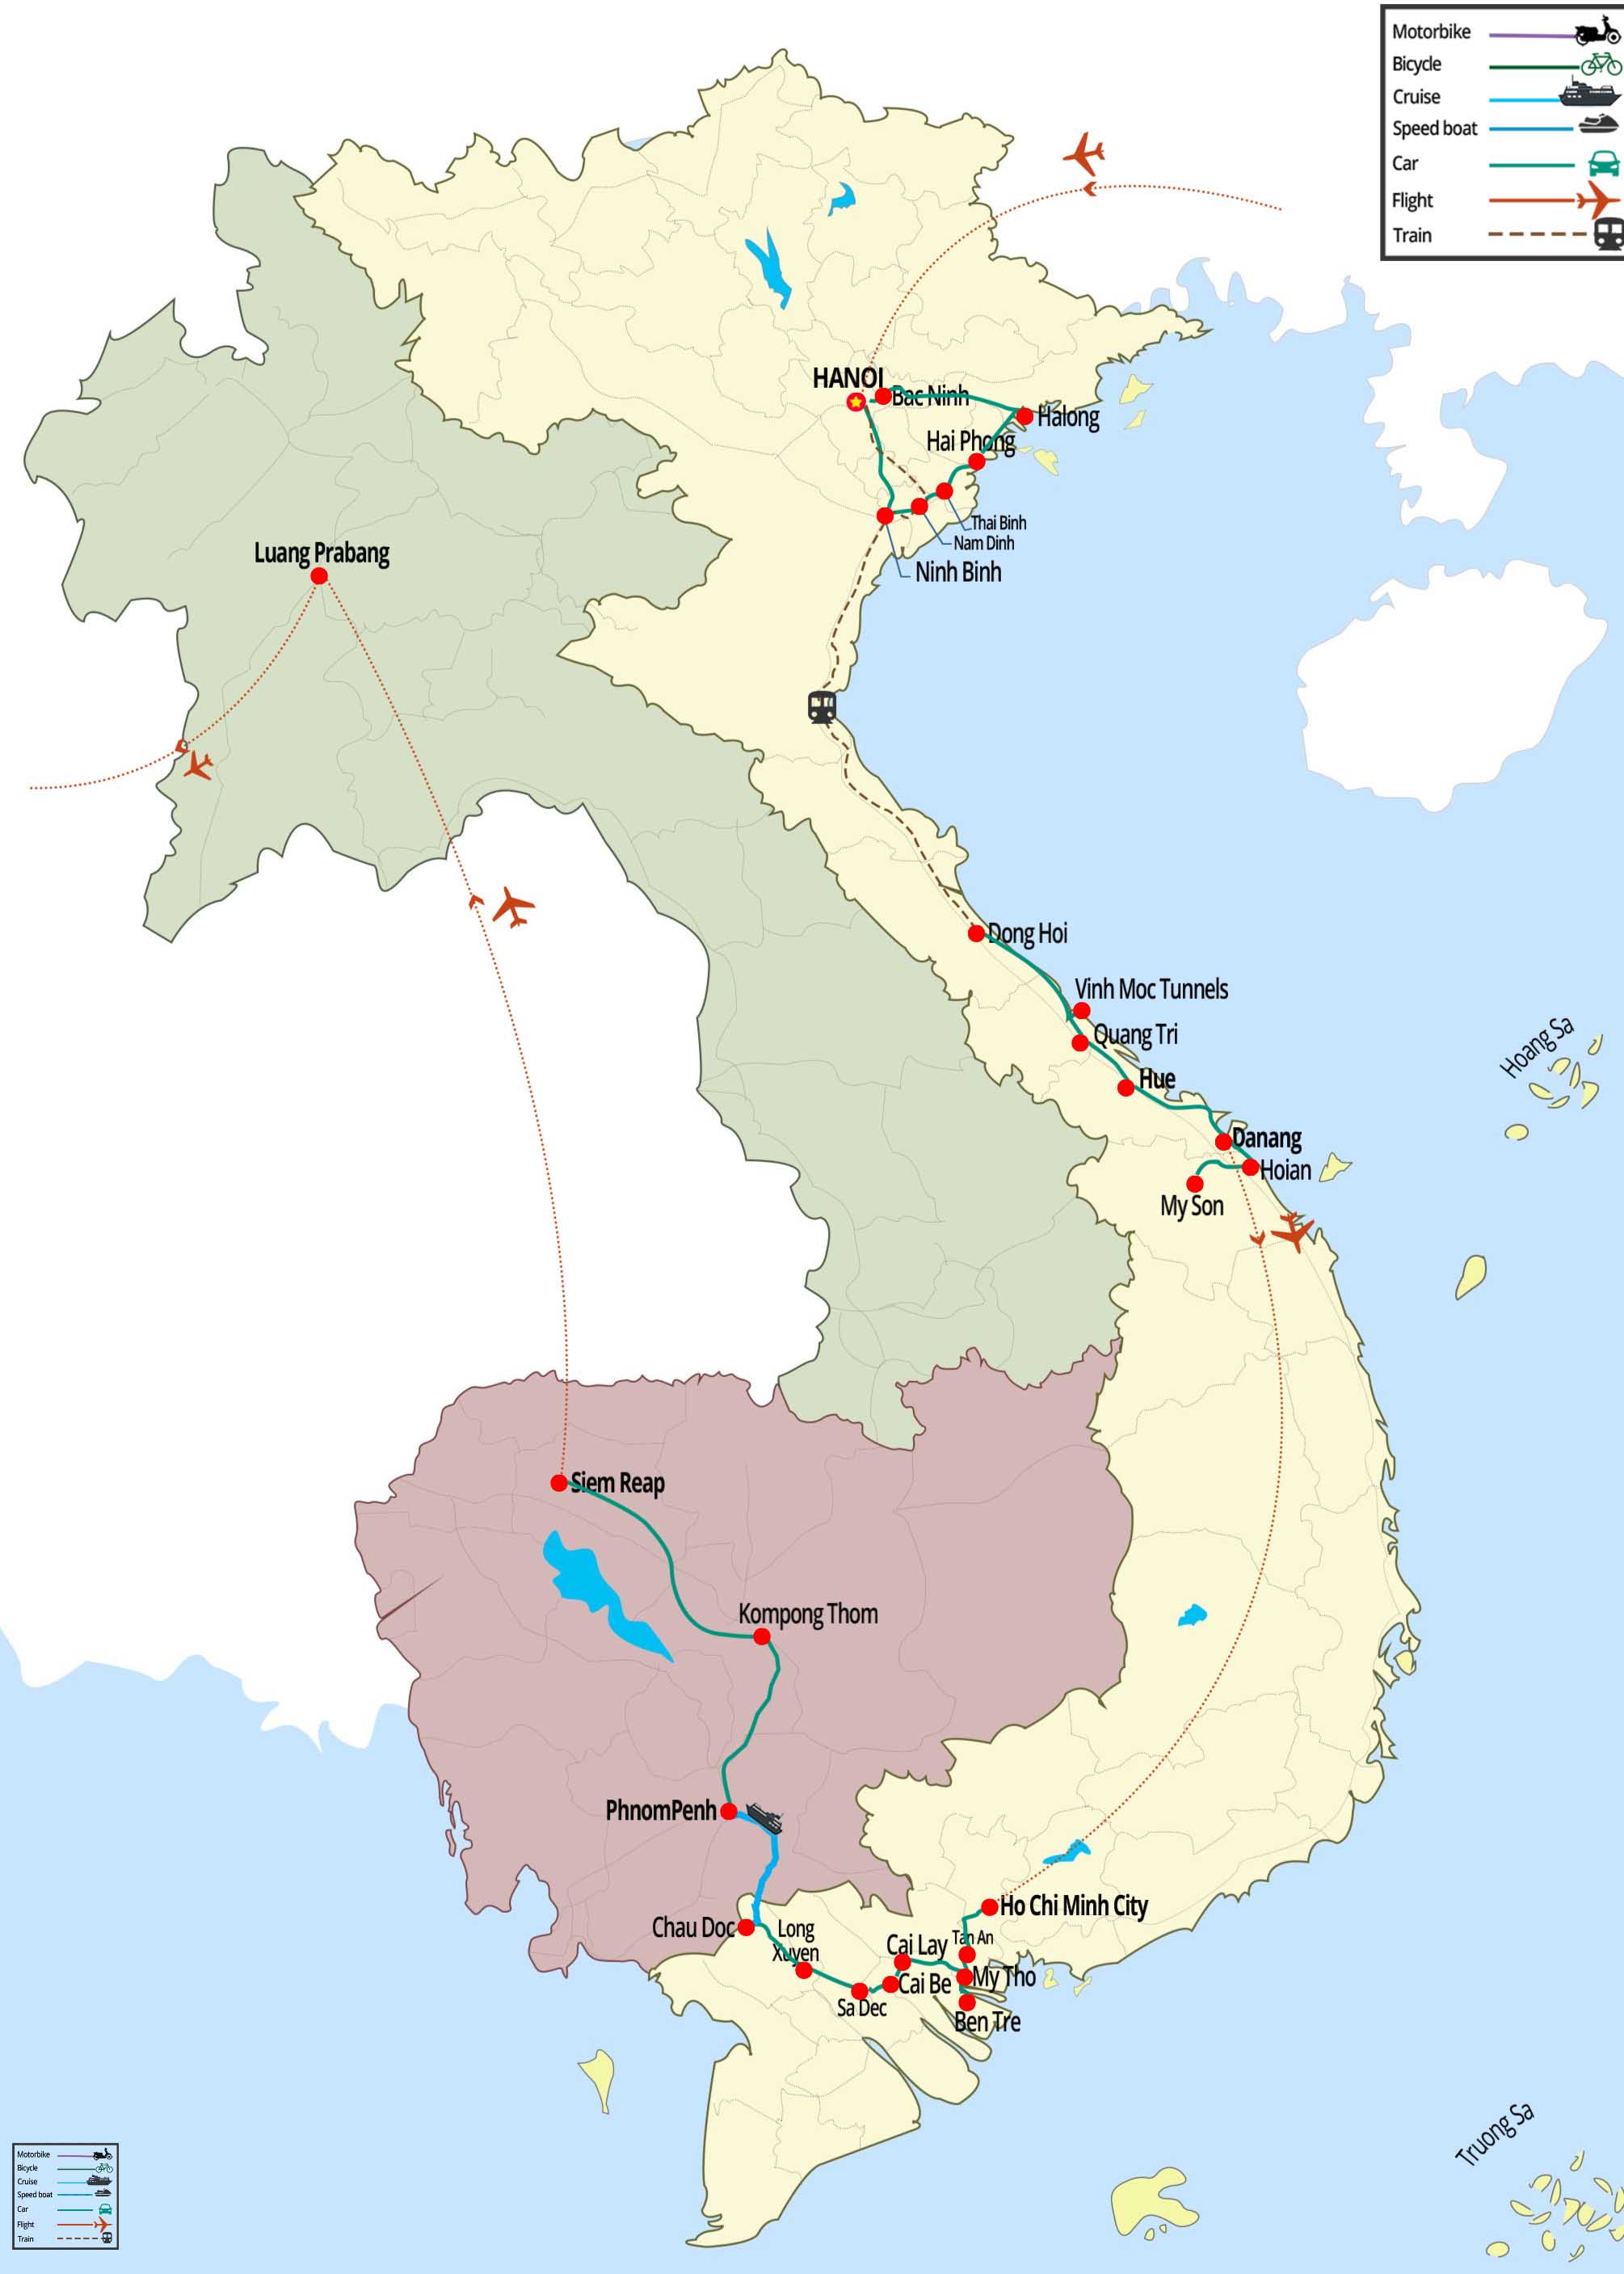 Circuit combiné Vietnam-Laos-Cambodge de 3 semaines